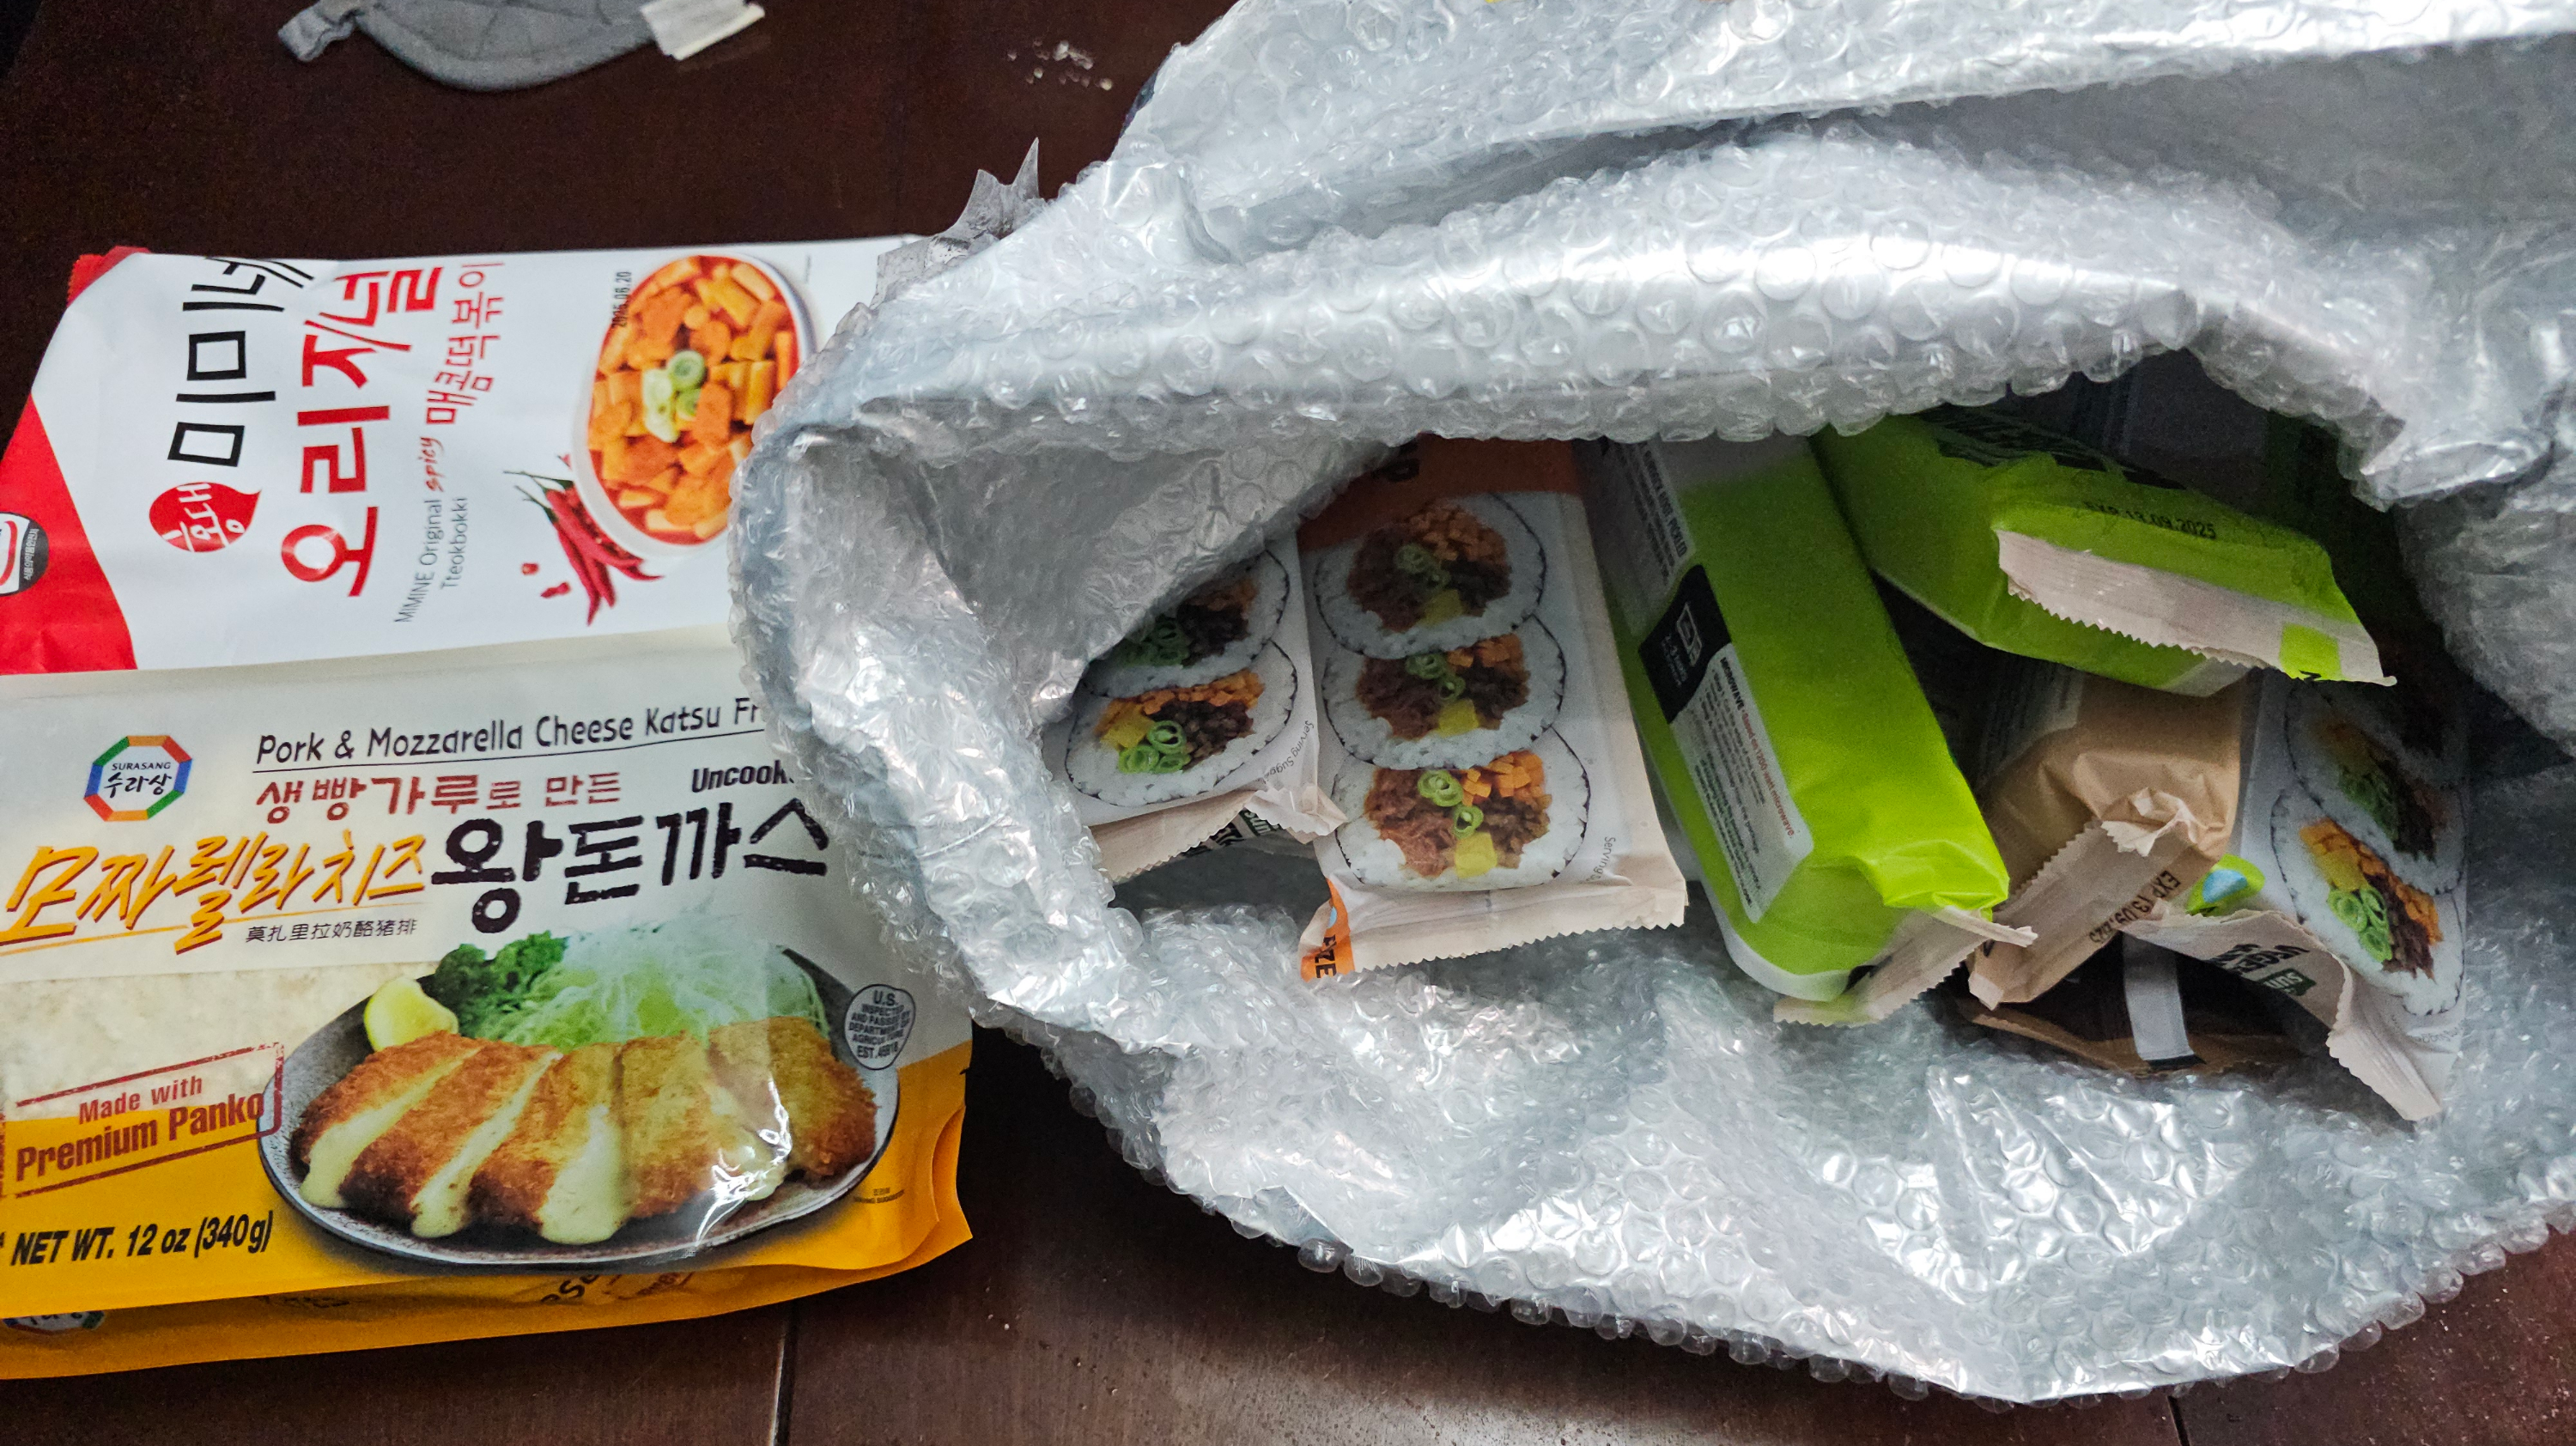 Weee!에서 구매한 선릿 냉동 김밥